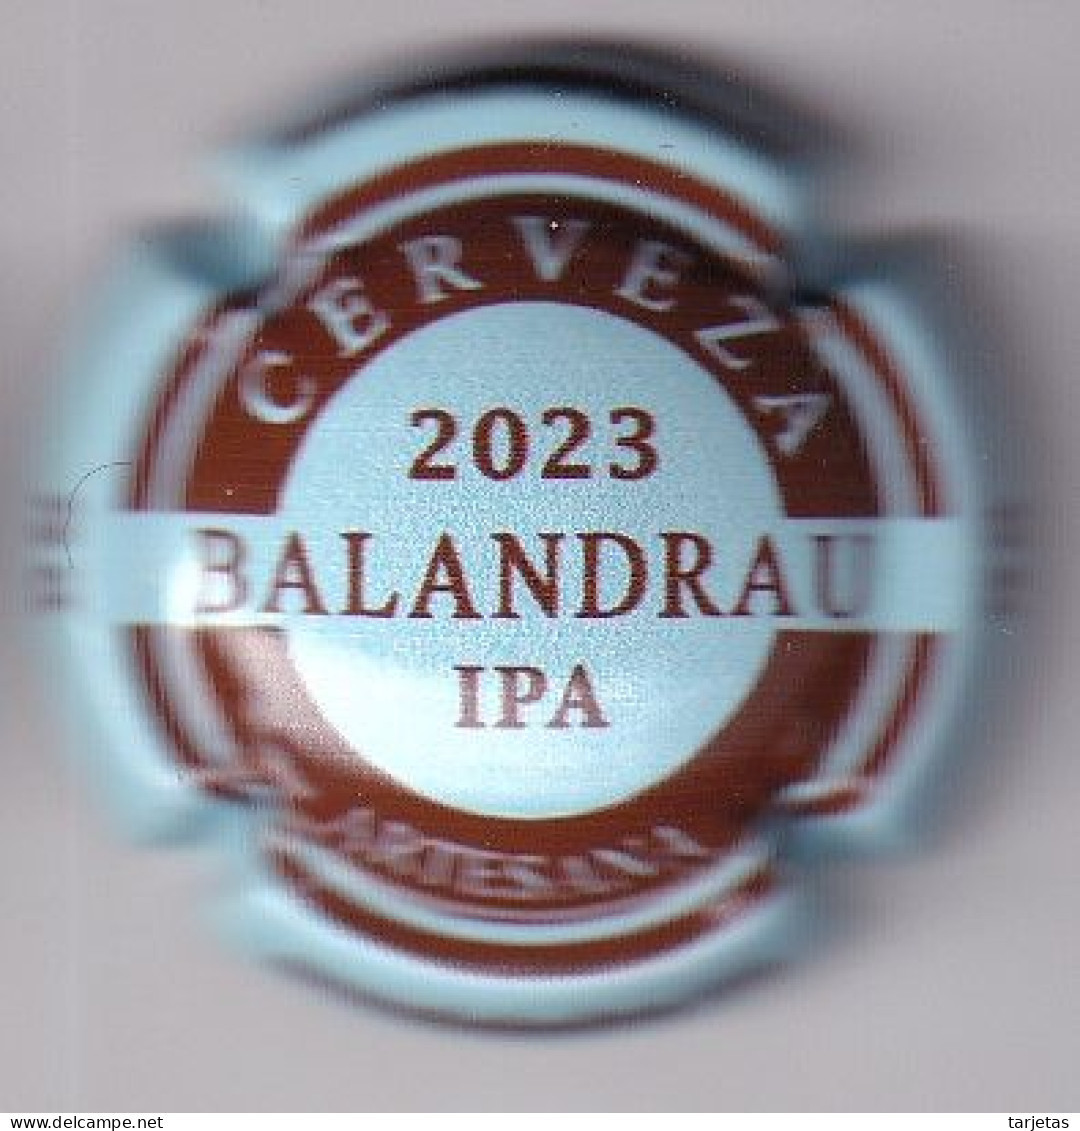 CHAPA DE CERVEZA ARTESANA BALANDRAU IPA 2023 (BEER-BIERE) CORONA - Cerveza